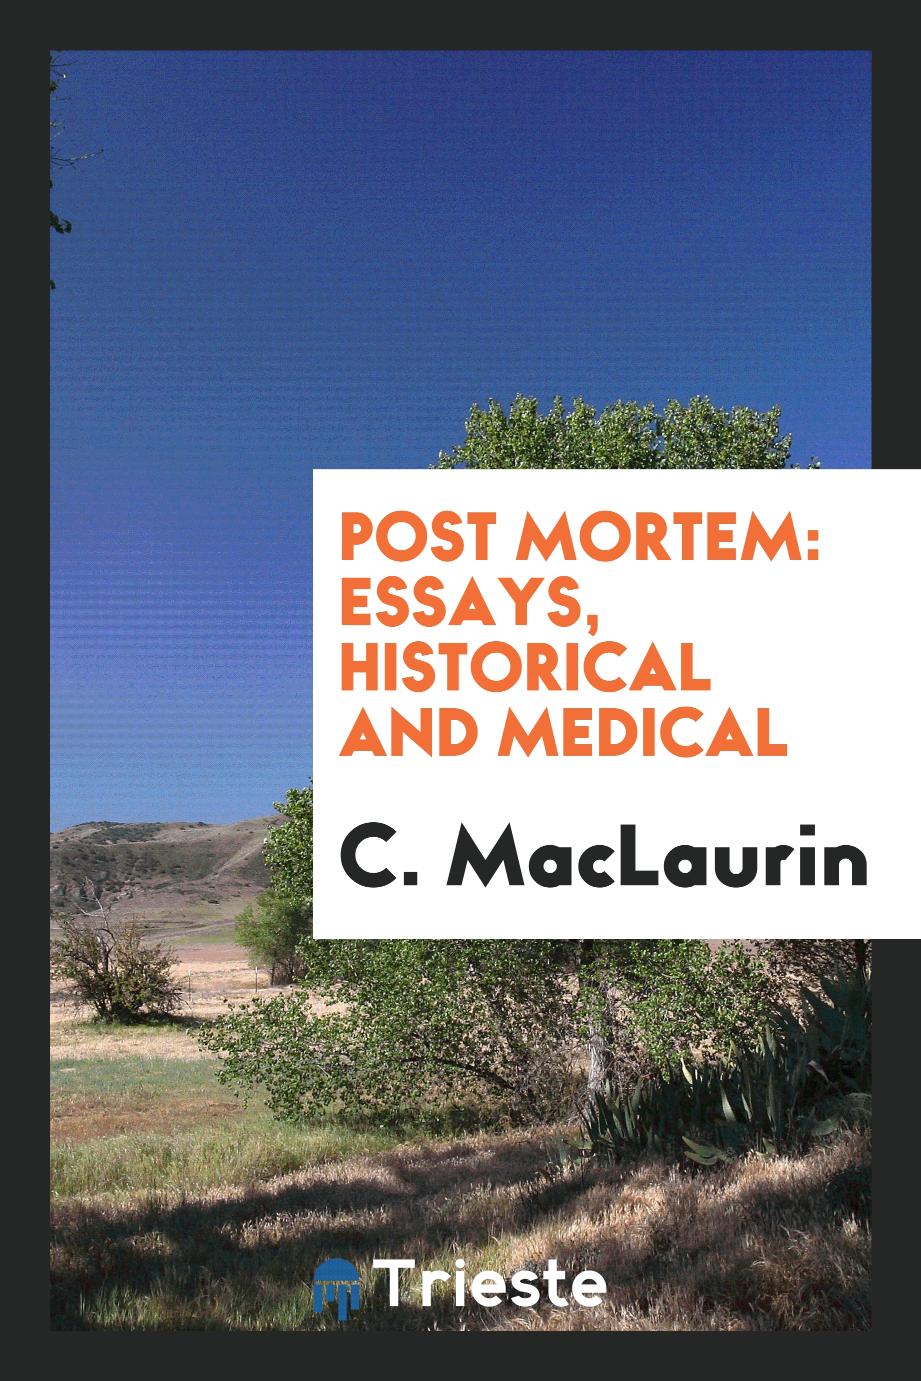 Post mortem: essays, historical and medical